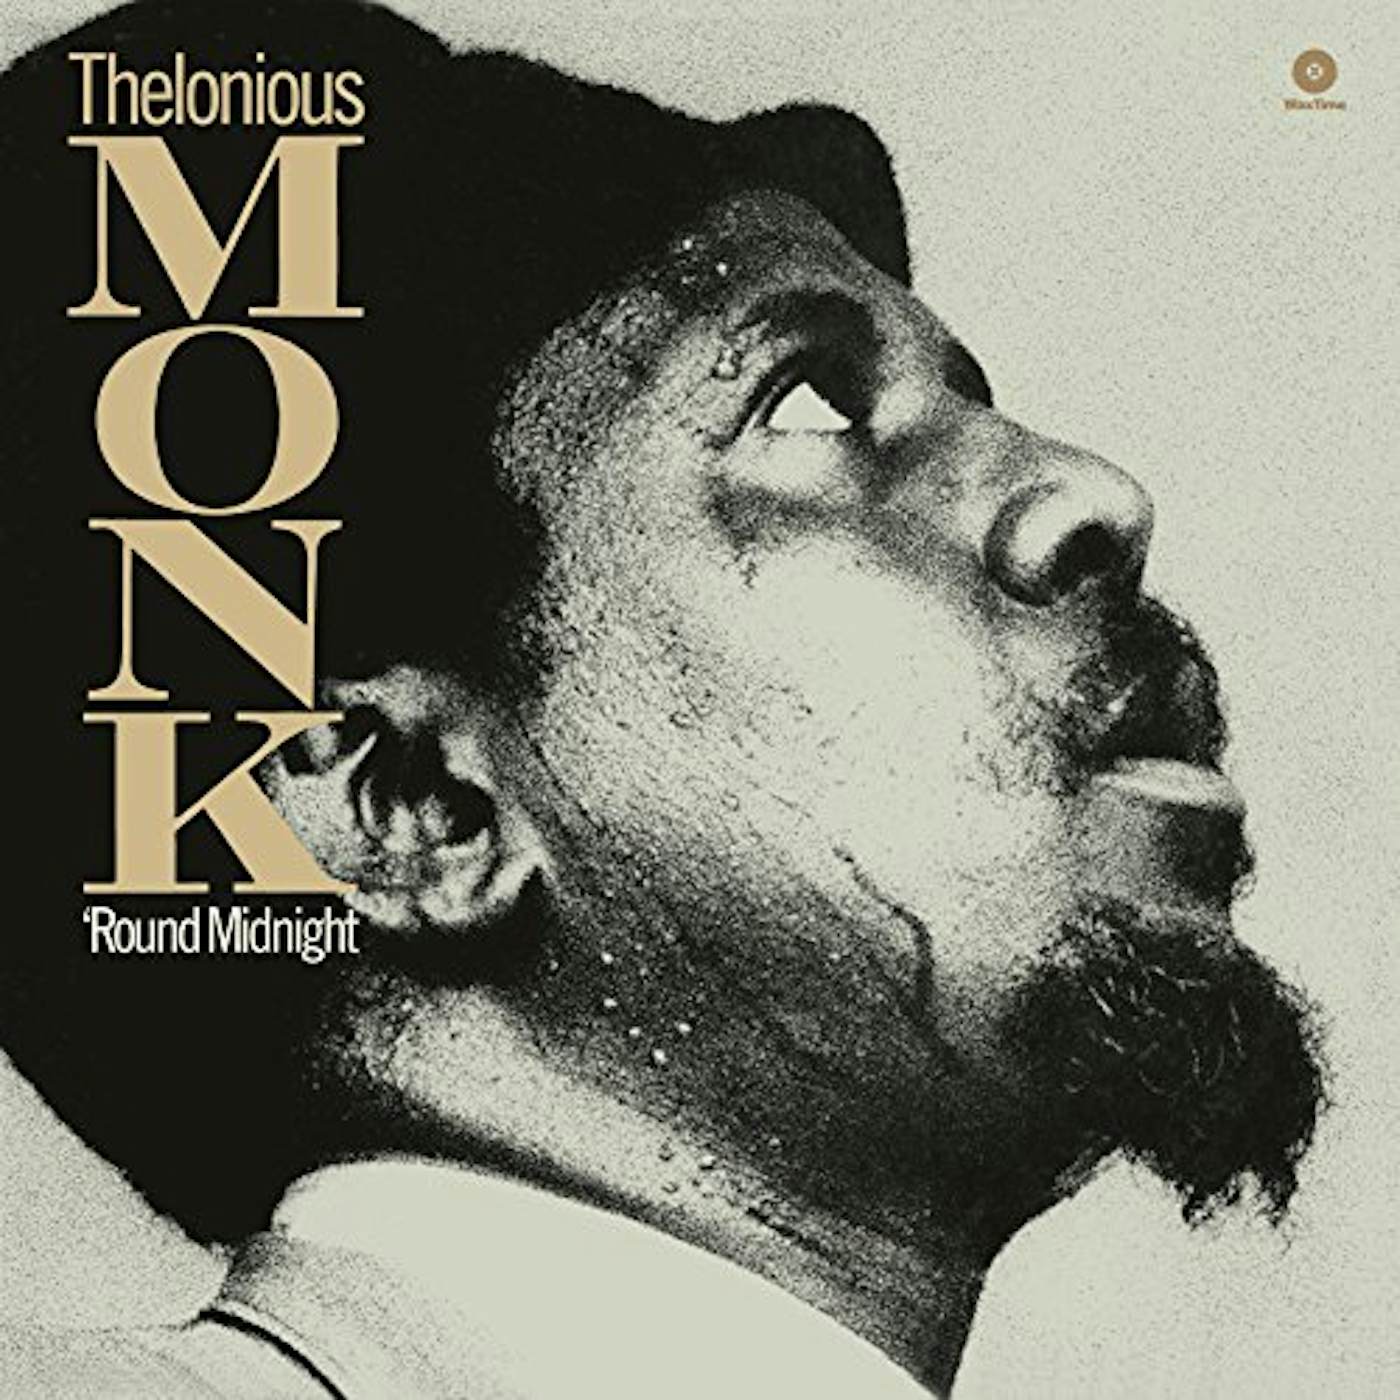 Thelonious Monk ROUND MIDNIGHT (BONUS TRACK) Vinyl Record - 180 Gram Pressing, Remastered, Spain Release